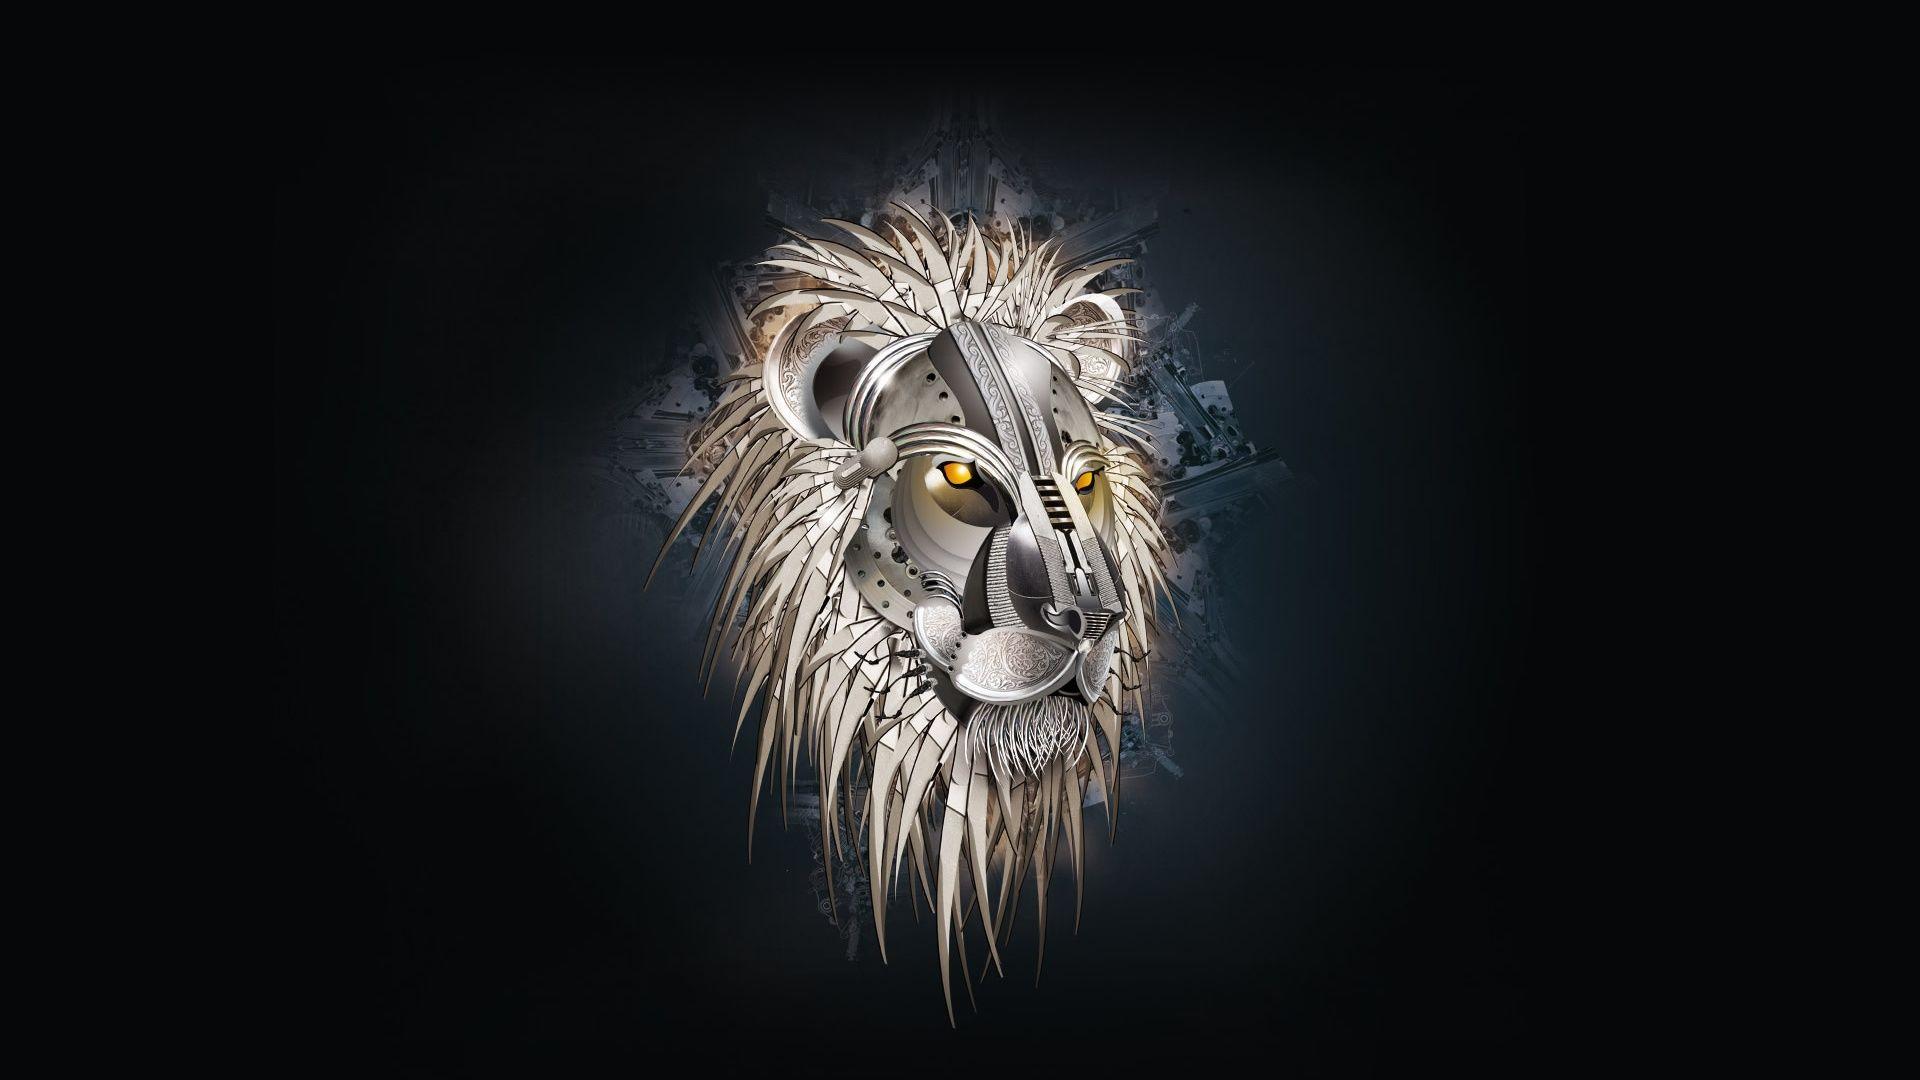 3D Robot Lion Background Image HD Desktop Wallpaper, Instagram